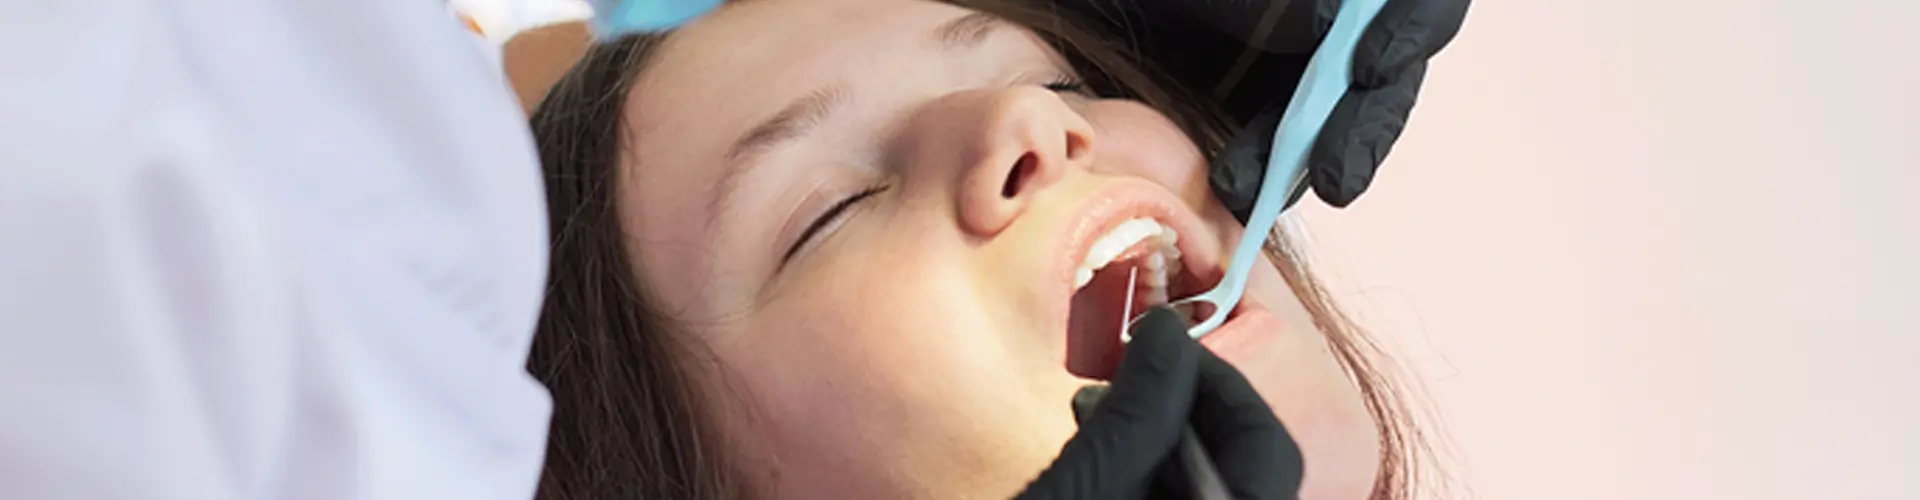 Dentist attending patient